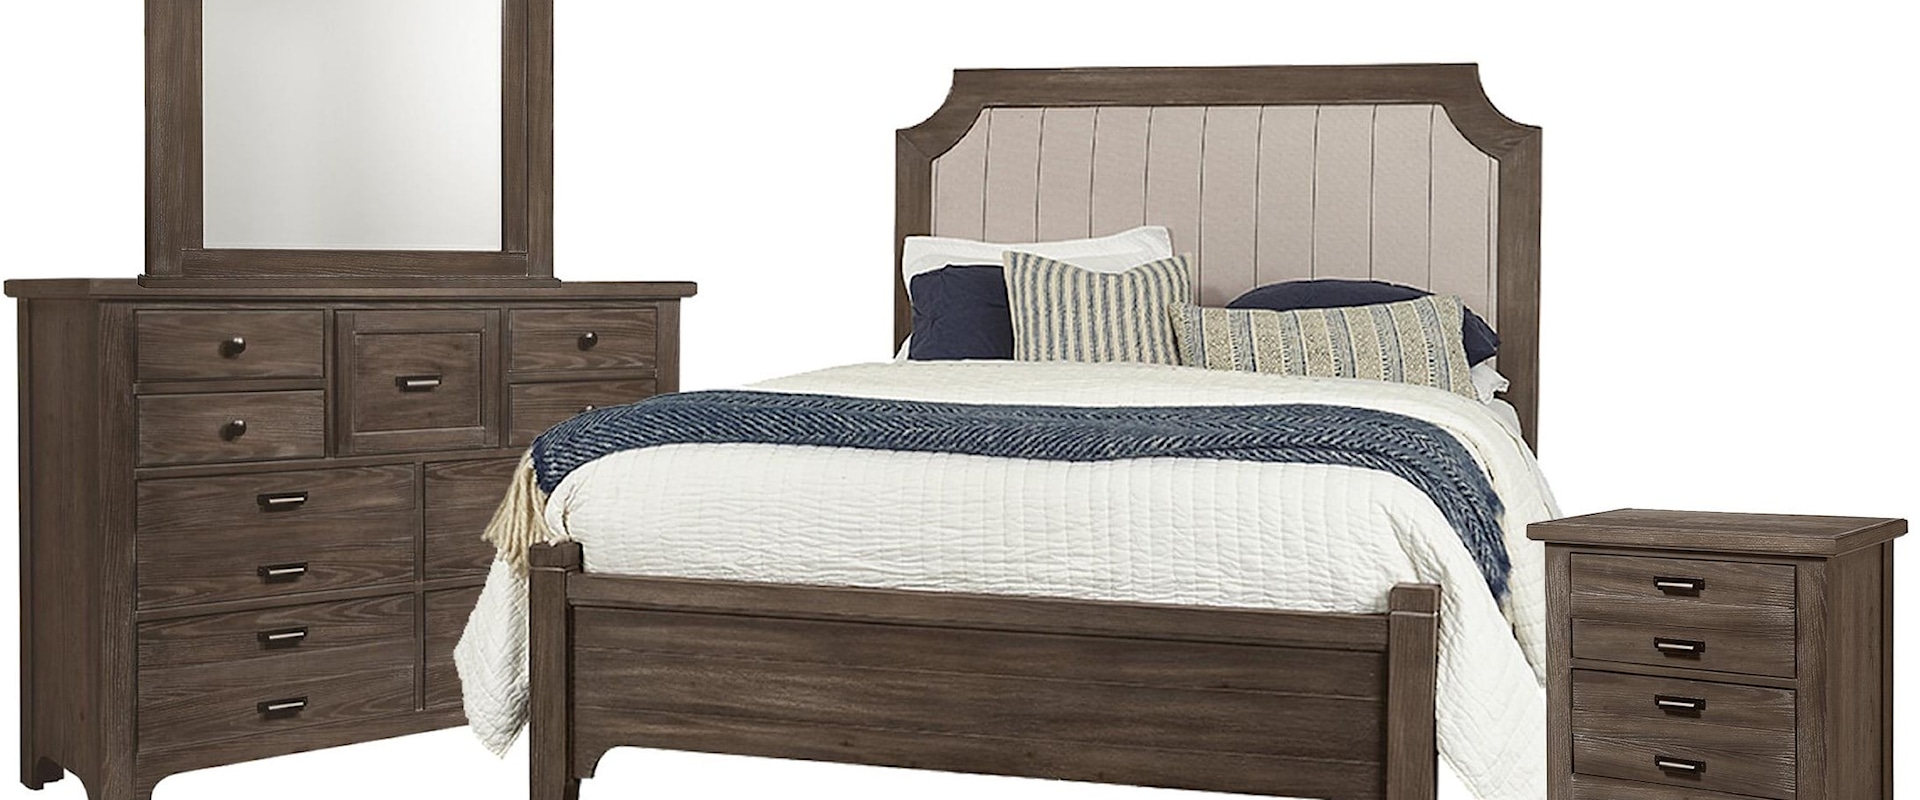 Queen Upholstered Bed, 9 Drawer Dresser, Master Arch Mirror, 2 Drawer Nightstand